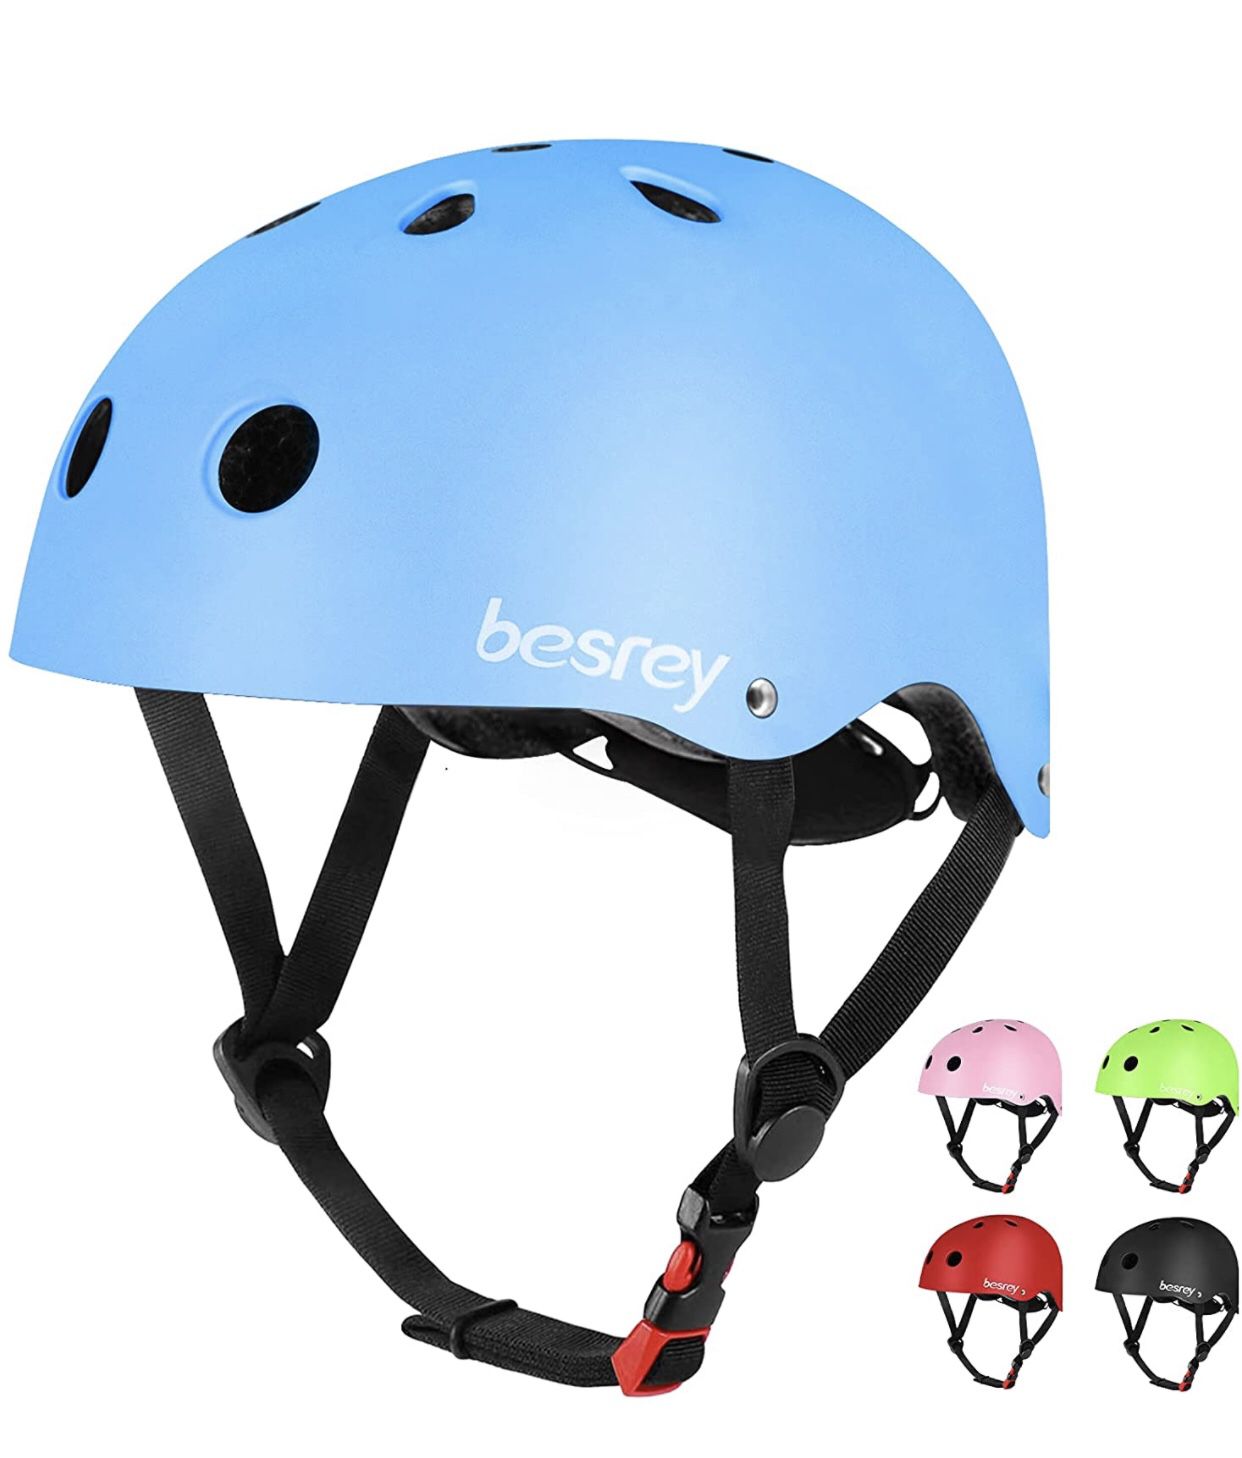 Toddler Bike Helmet- Ages 3-5